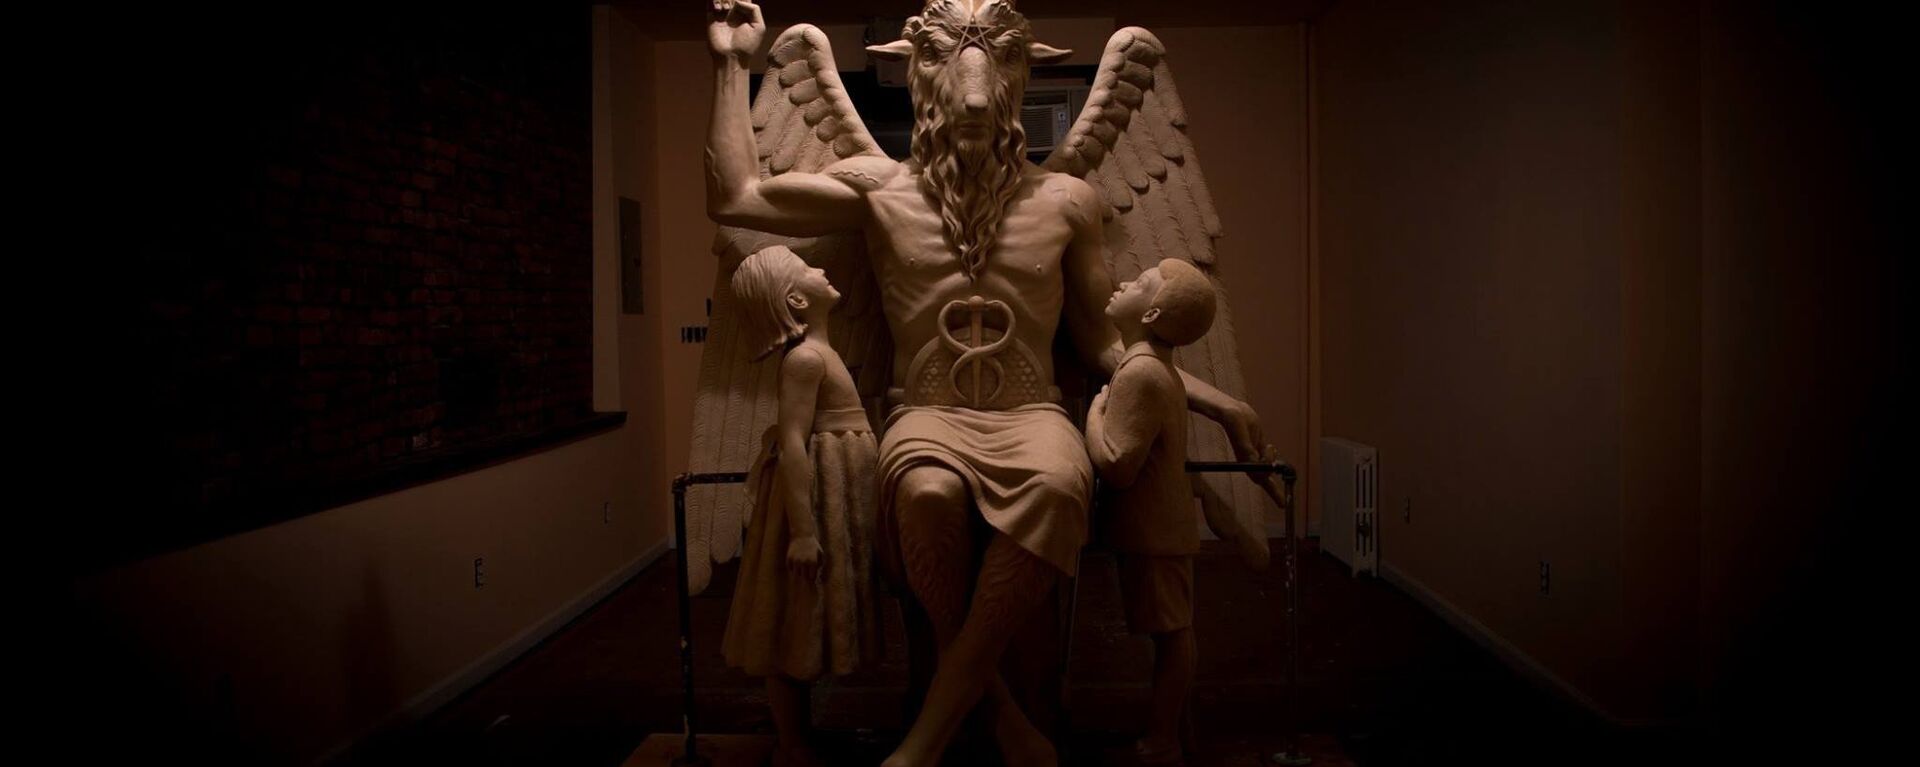 A sculpture of the Satanic god Baphomet unveiled by The Satanic Temple in Detroit, Michigan - Sputnik International, 1920, 09.12.2022